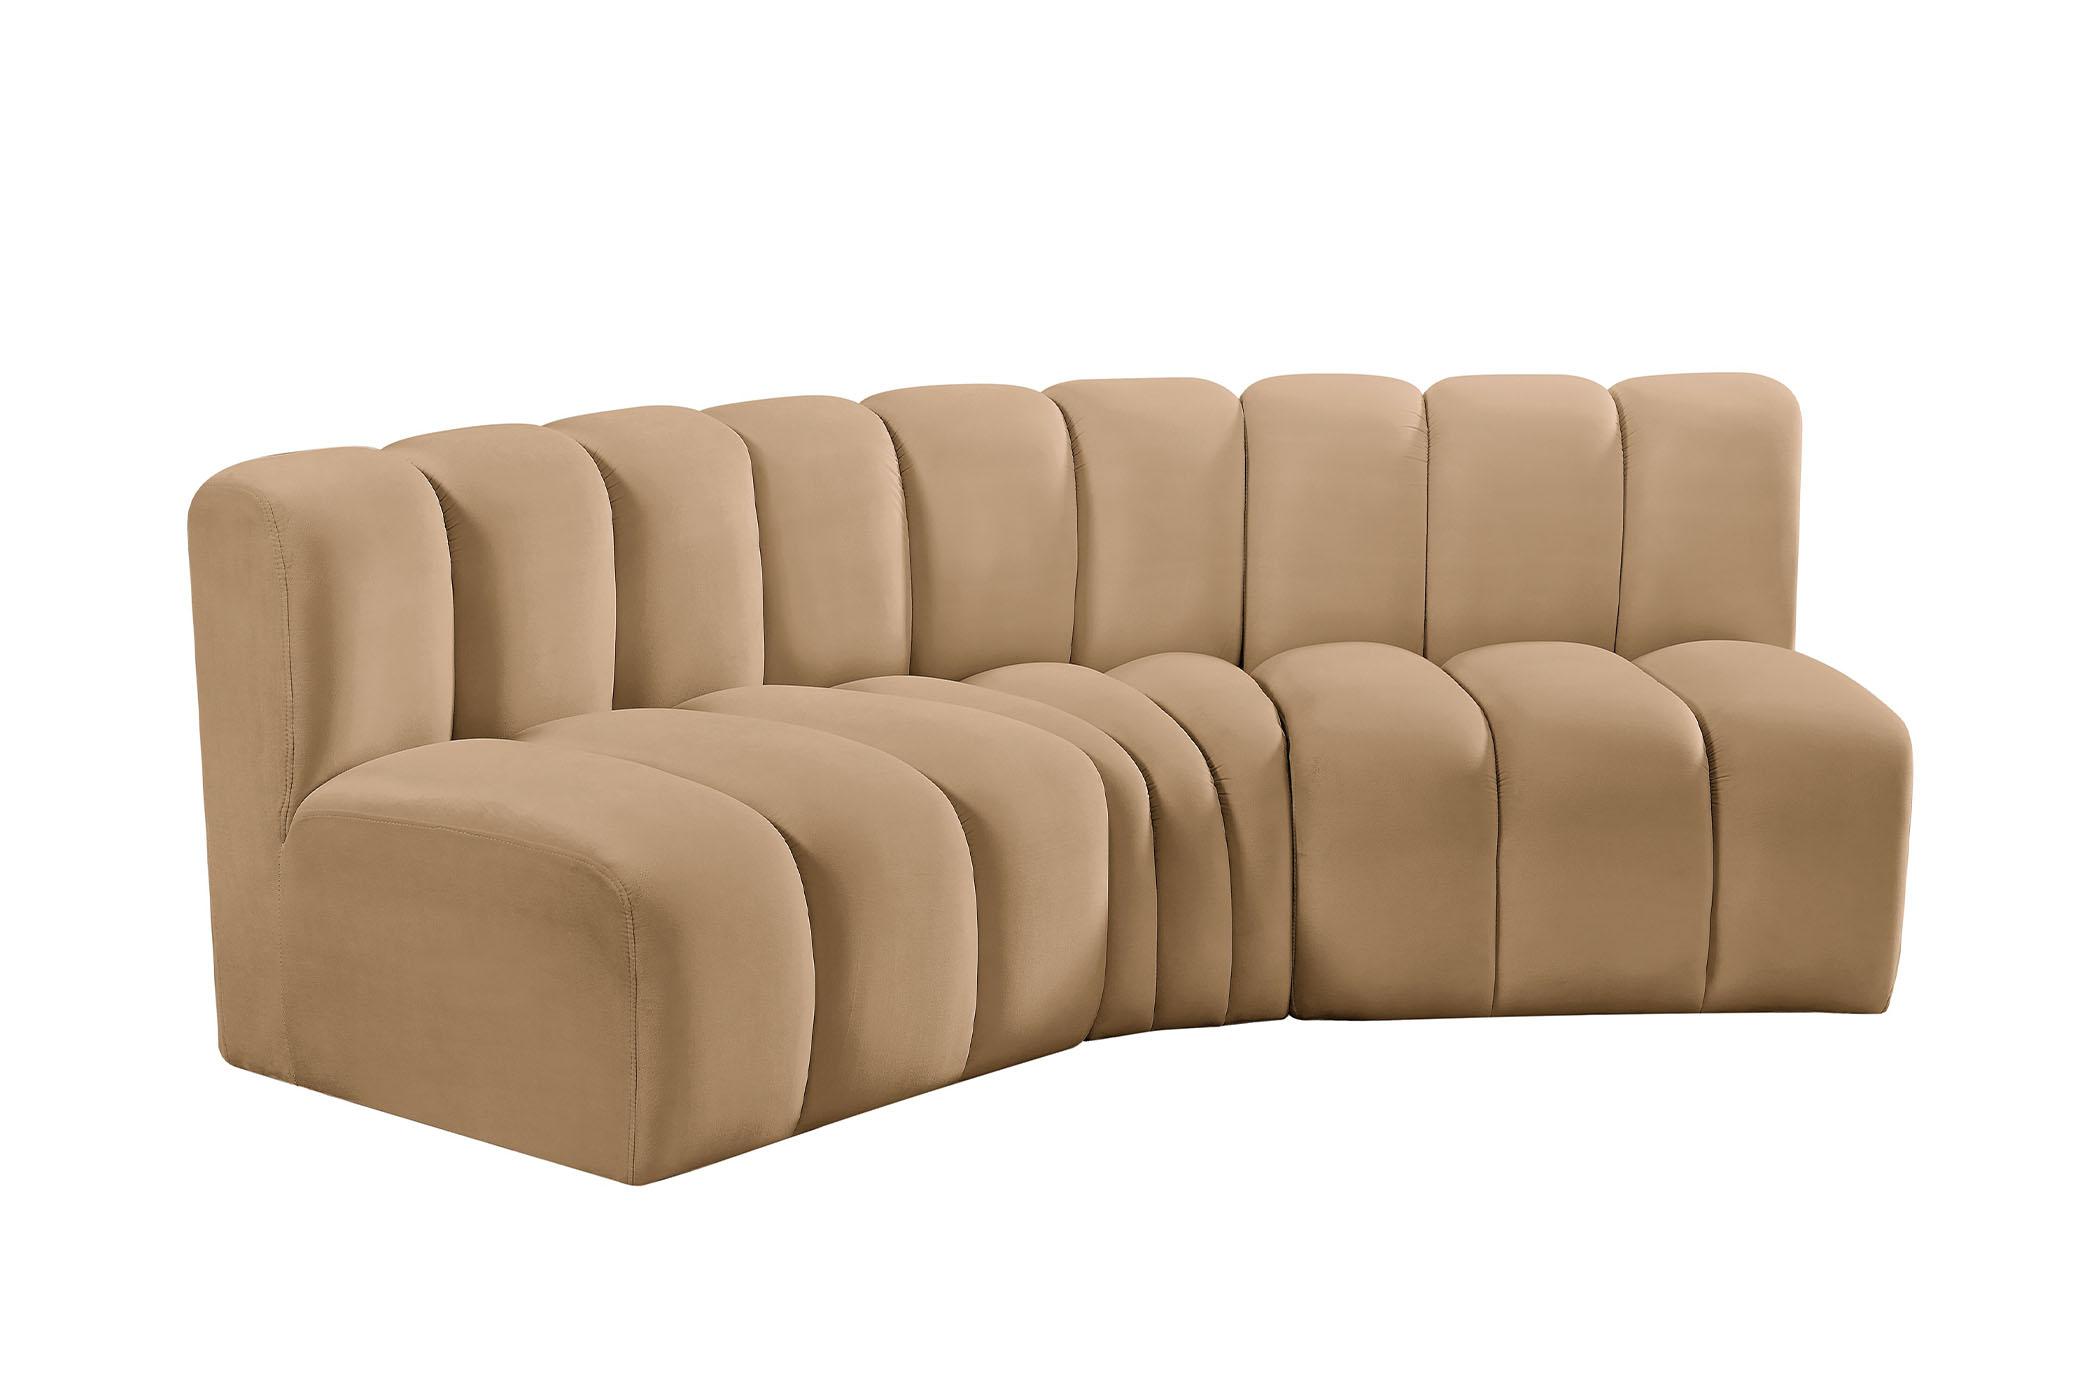 Contemporary, Modern Modular Sectional Sofa ARC 103Camel-S3B 103Camel-S3B in Camel Velvet